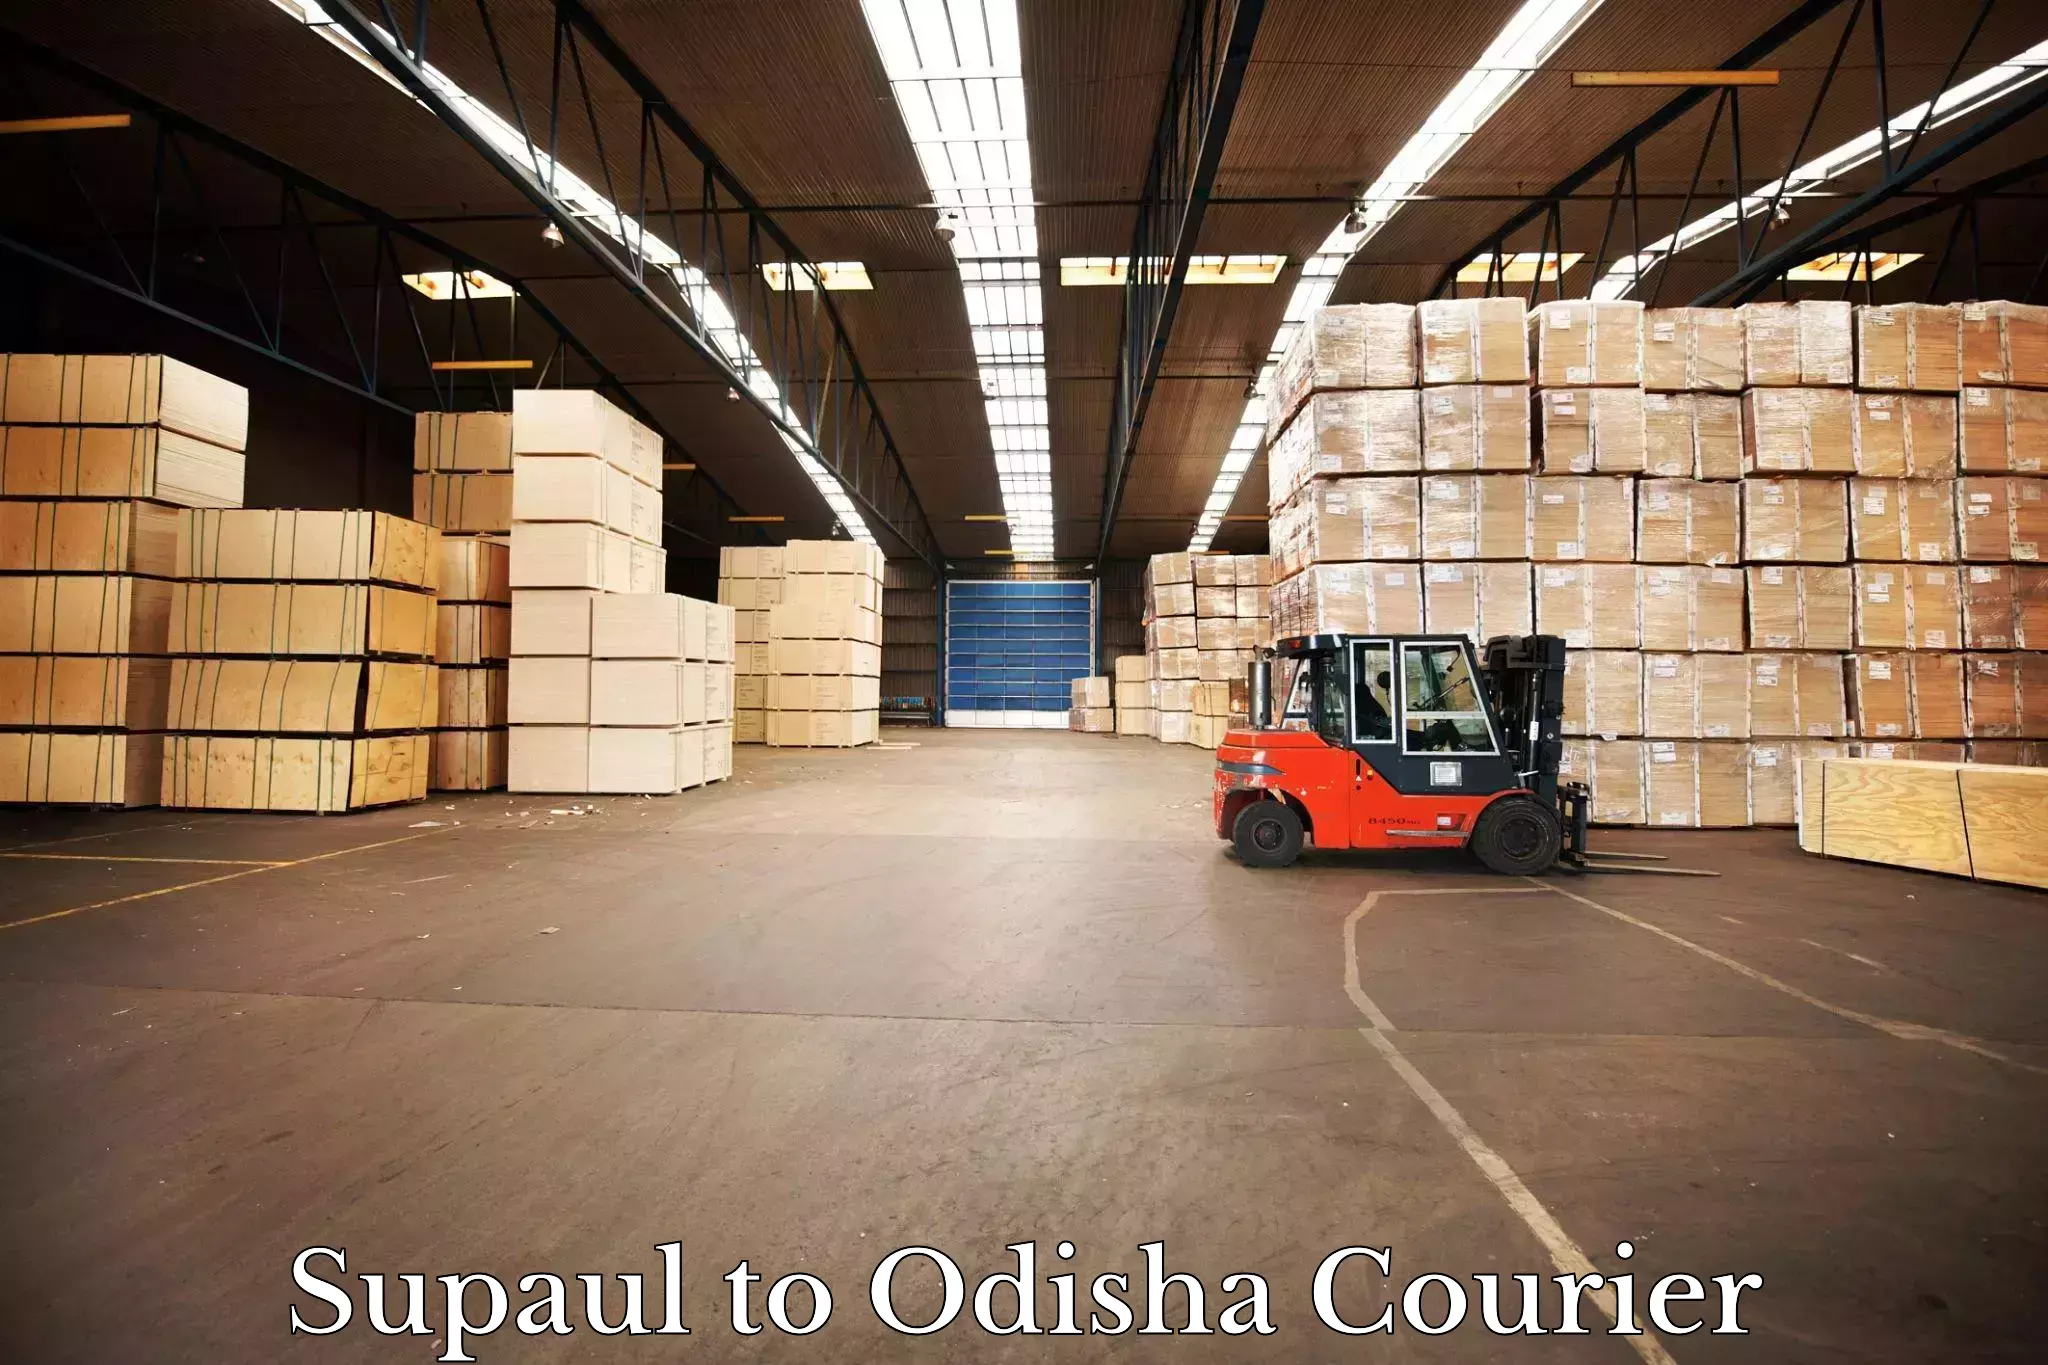 Subscription-based courier Supaul to Odisha